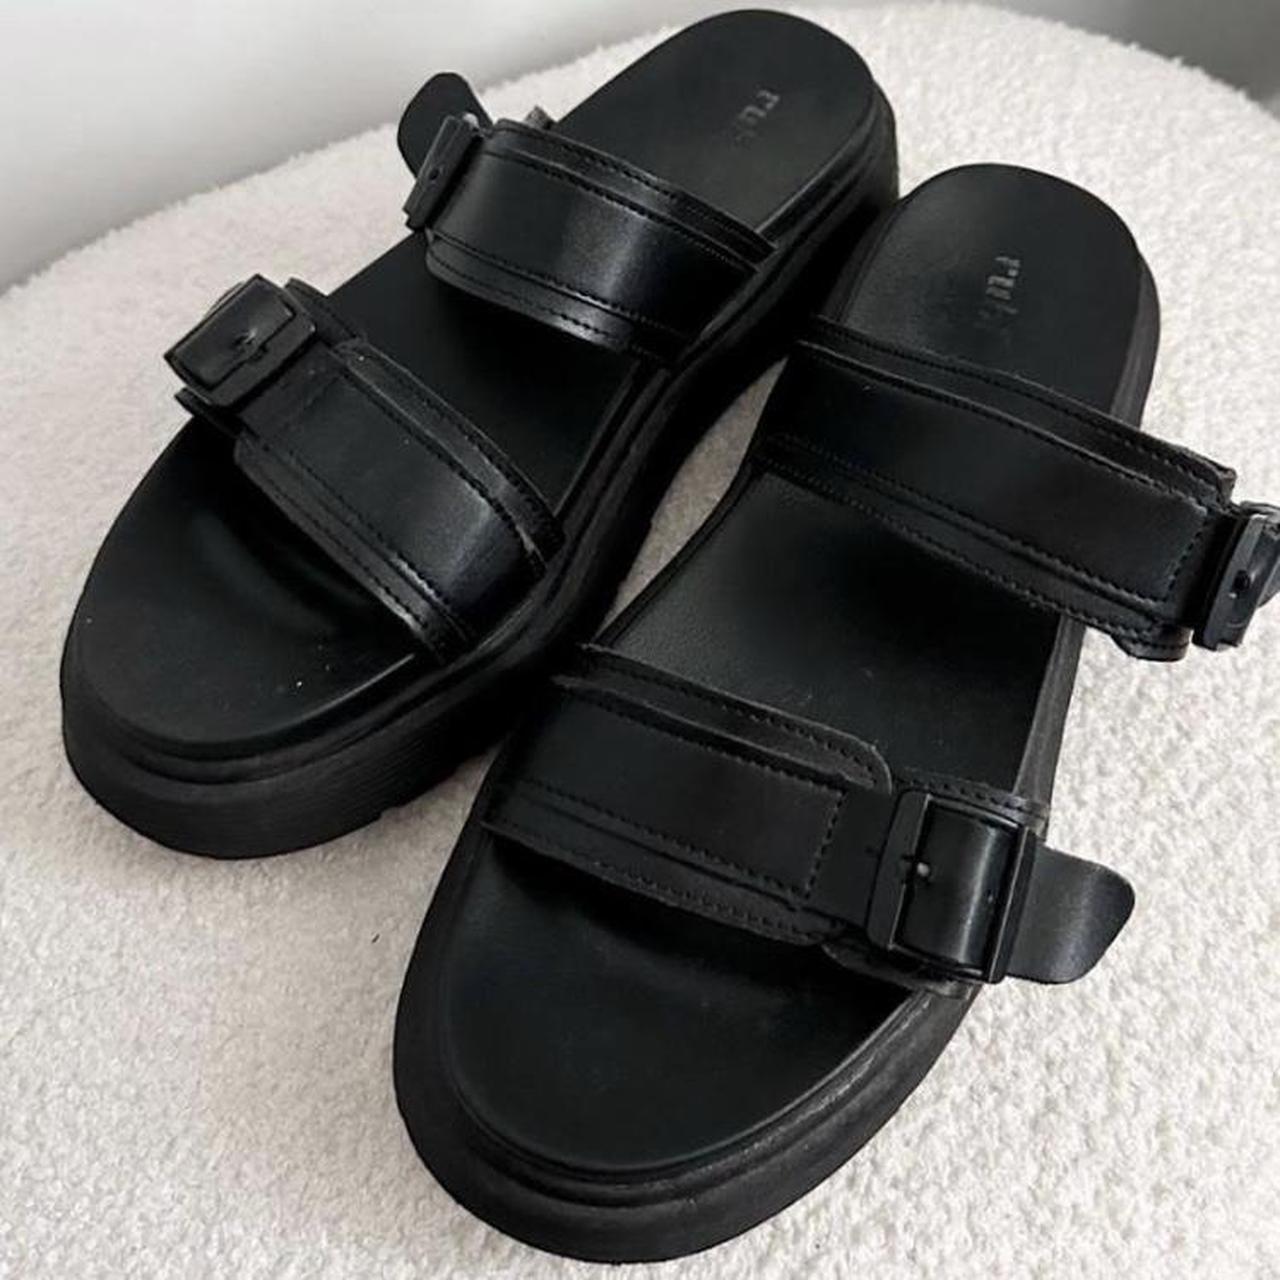 rubi black sandals only worn a couple times - Depop